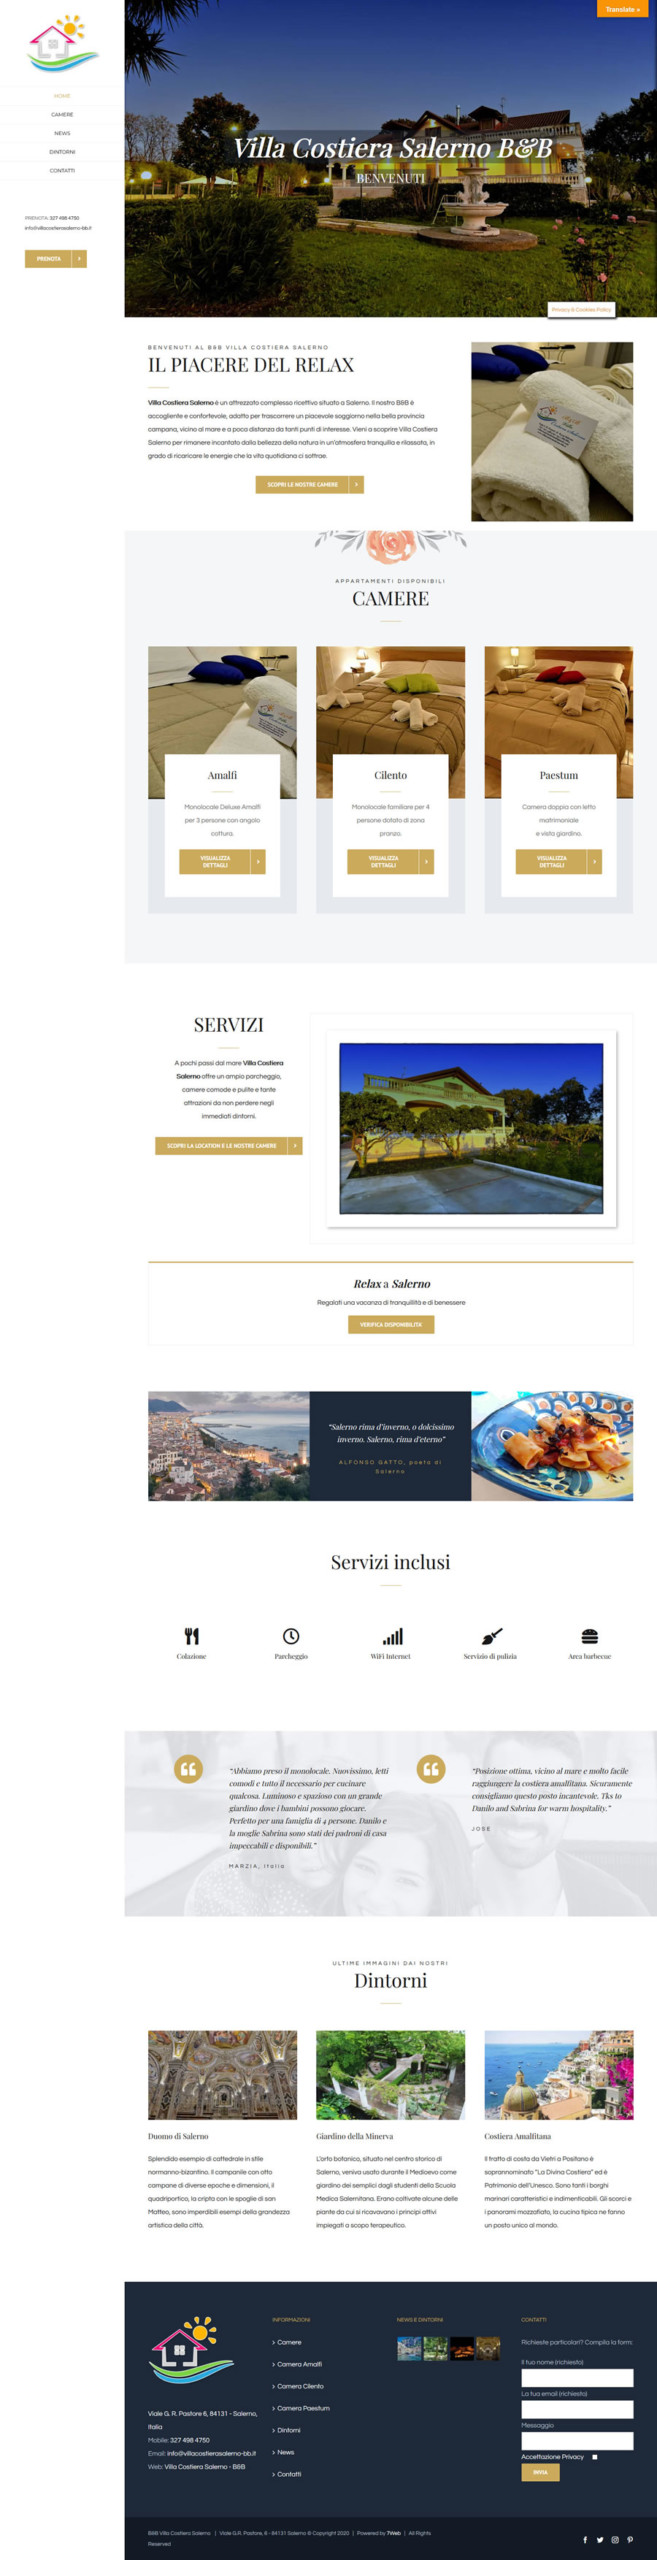 Villa Costiera Salerno BB - Setteweb.com Portfolio Sito Web WordPress 7Web-2020